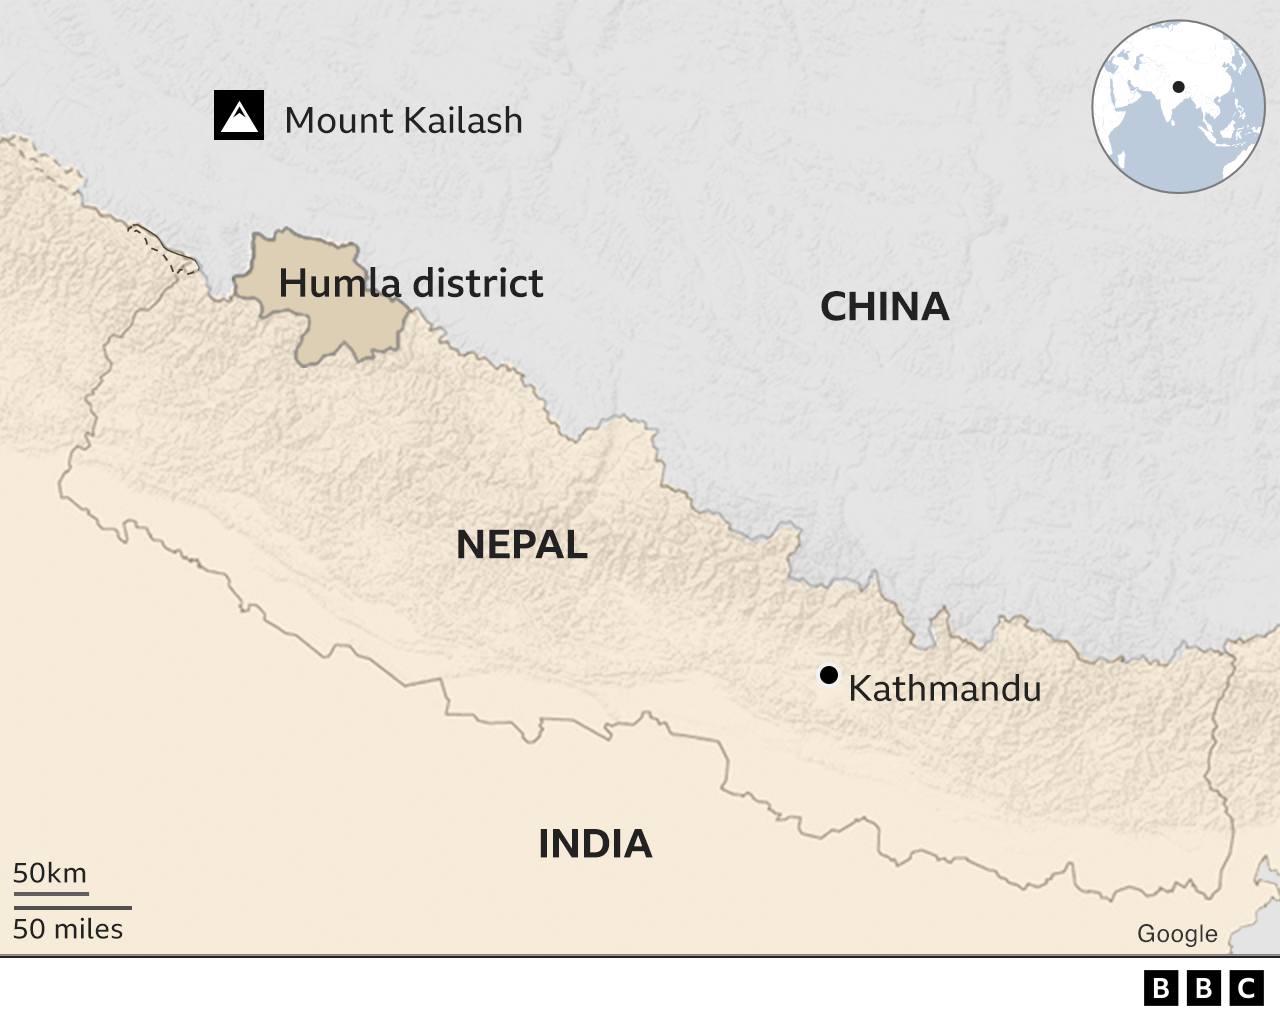 China encroaching along Nepal border - report - BBC News